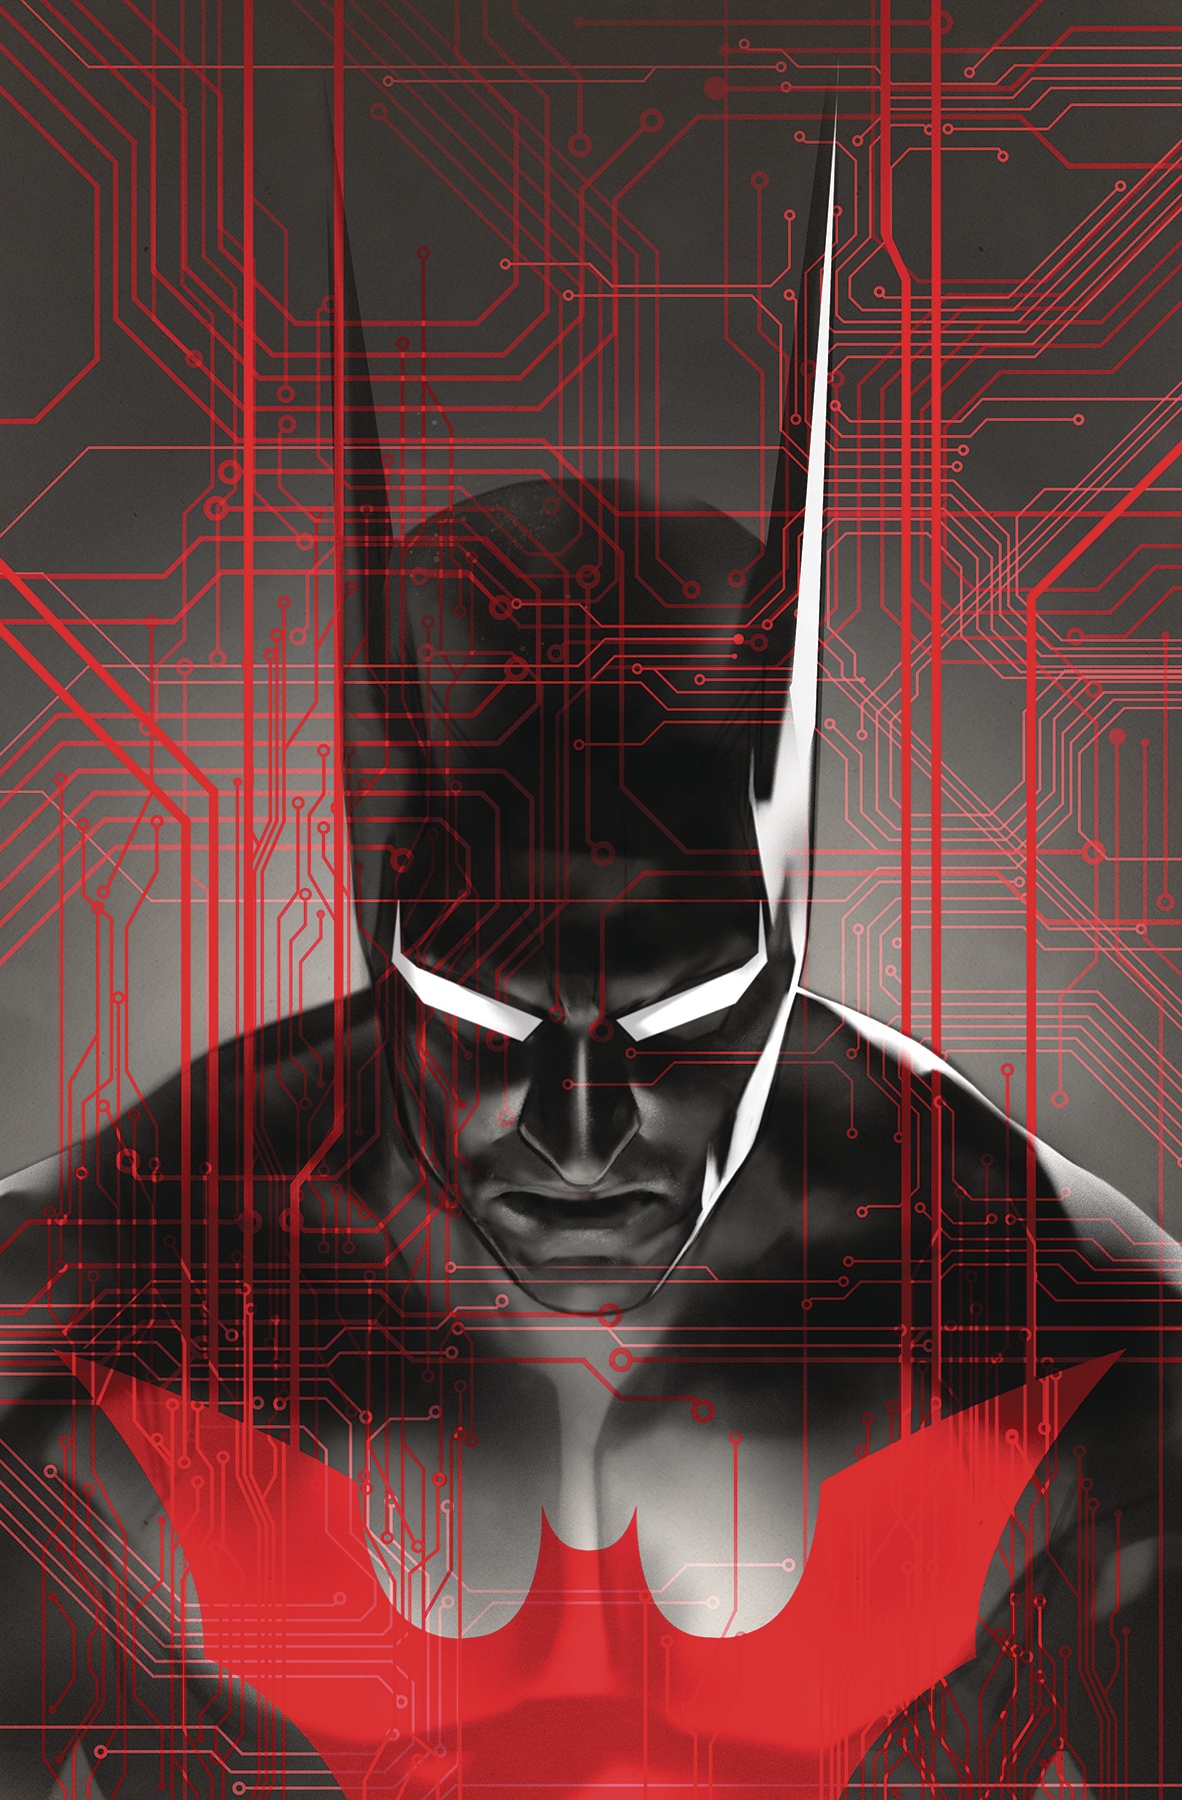 The Batman X SCREAM 6 🔪 - - - - #batman #batmanbeyond